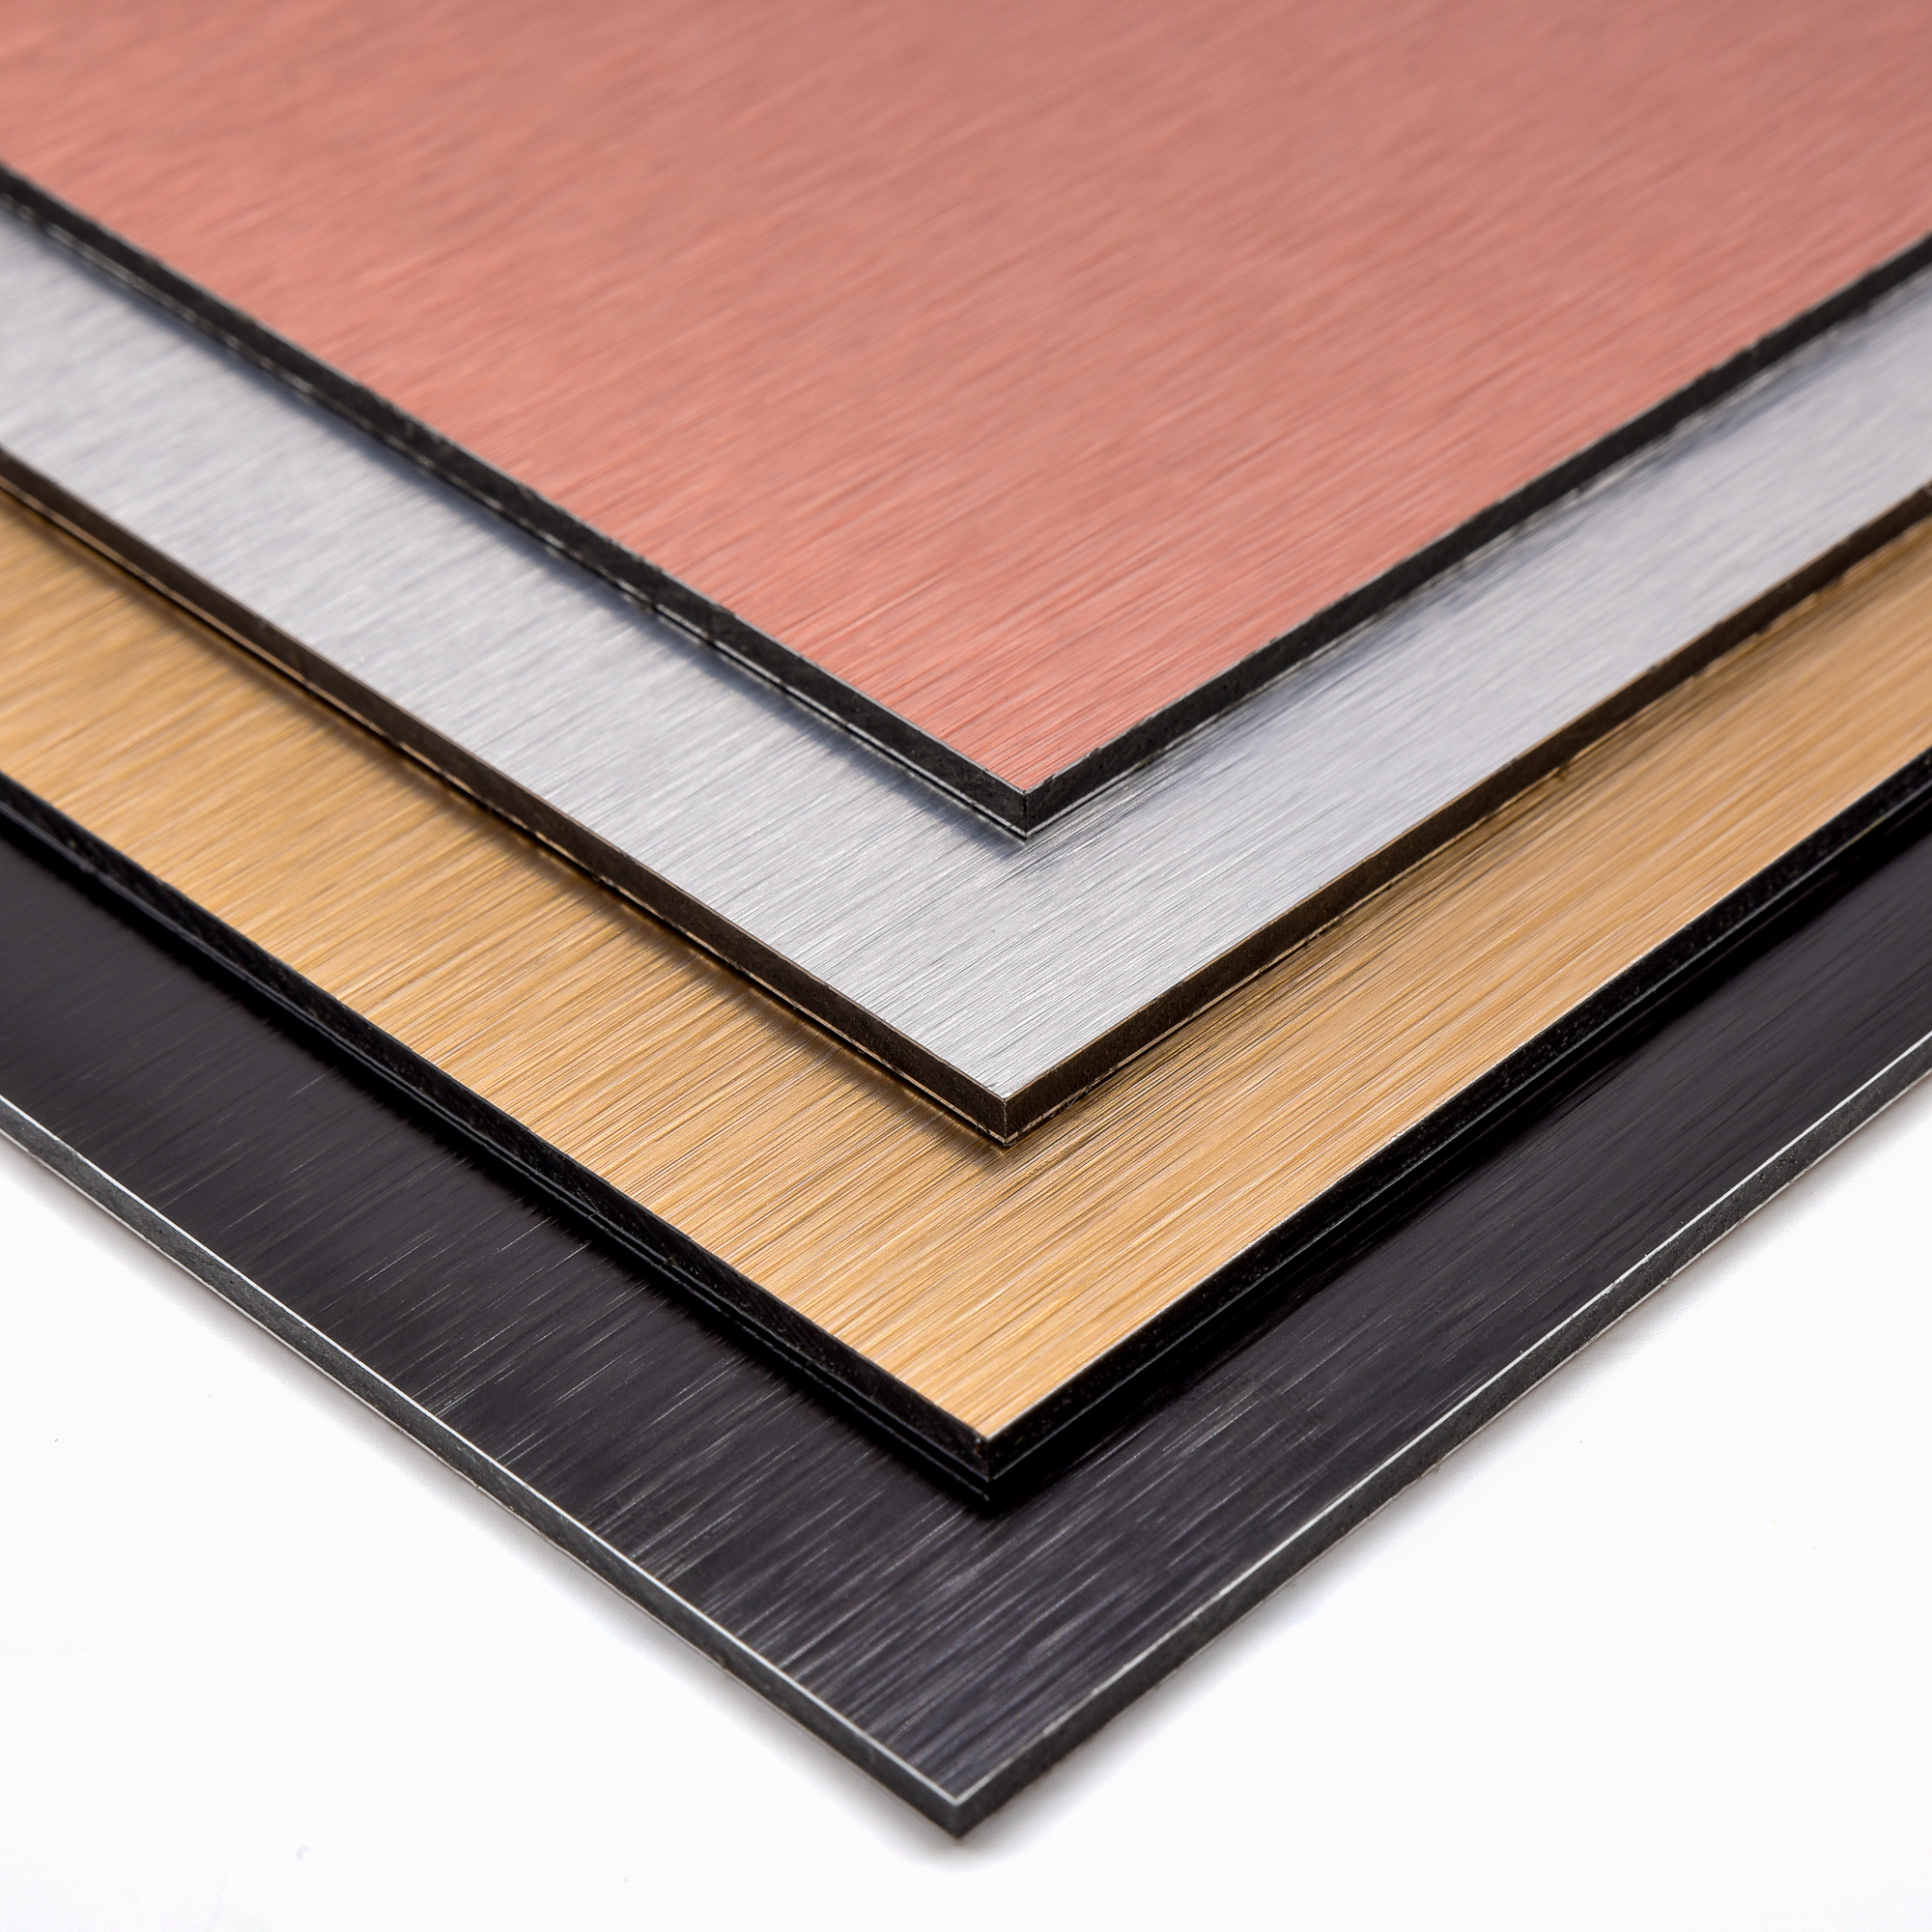 4 aluminium composite sheets in different colours